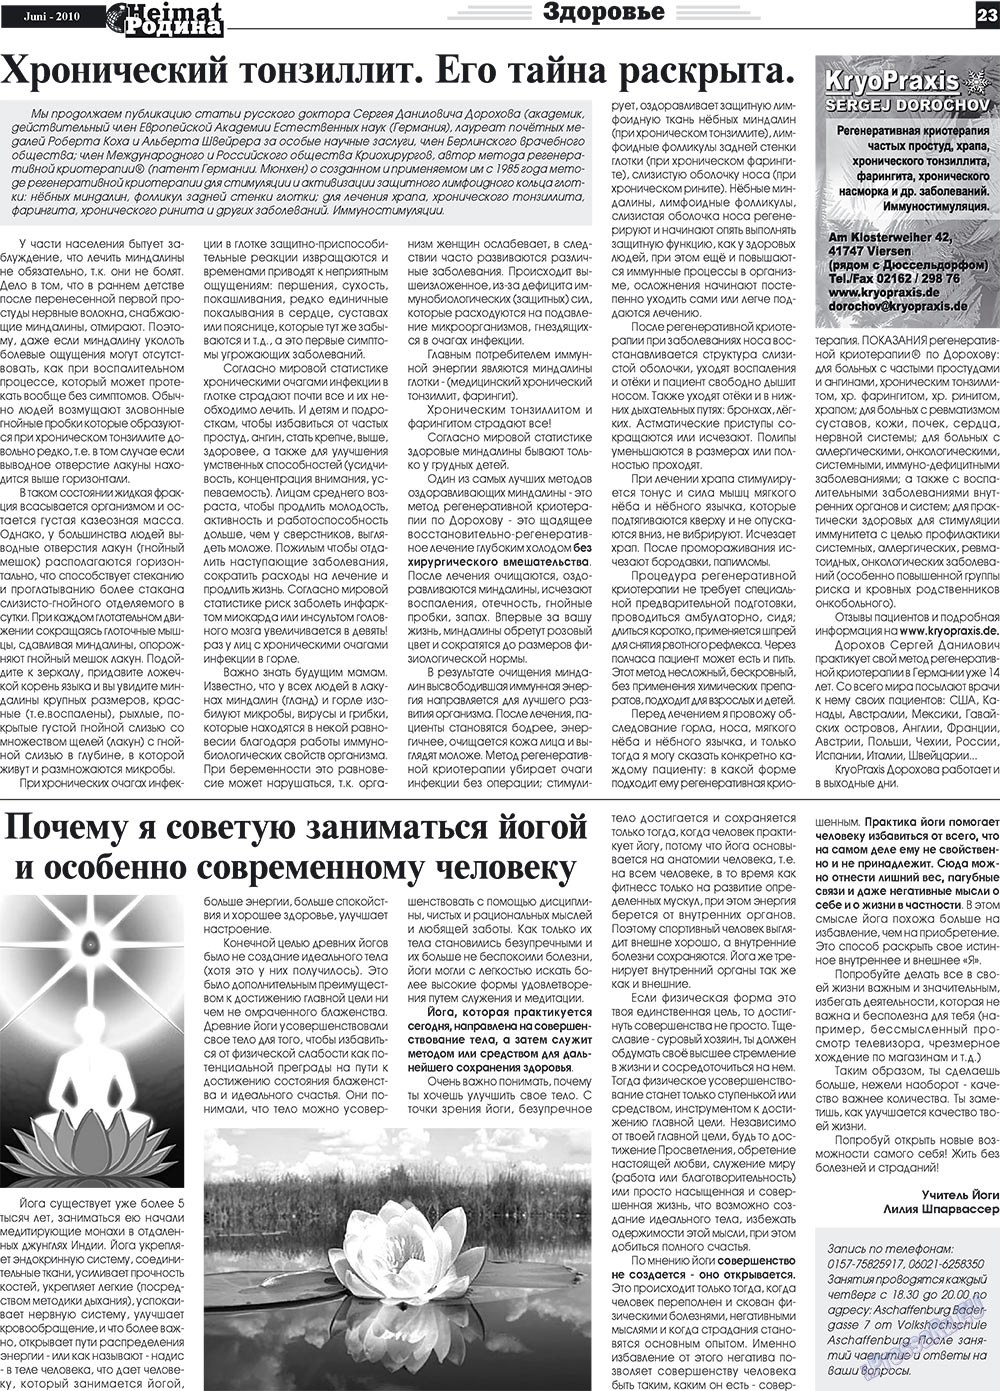 Heimat-Родина, газета. 2010 №6 стр.23